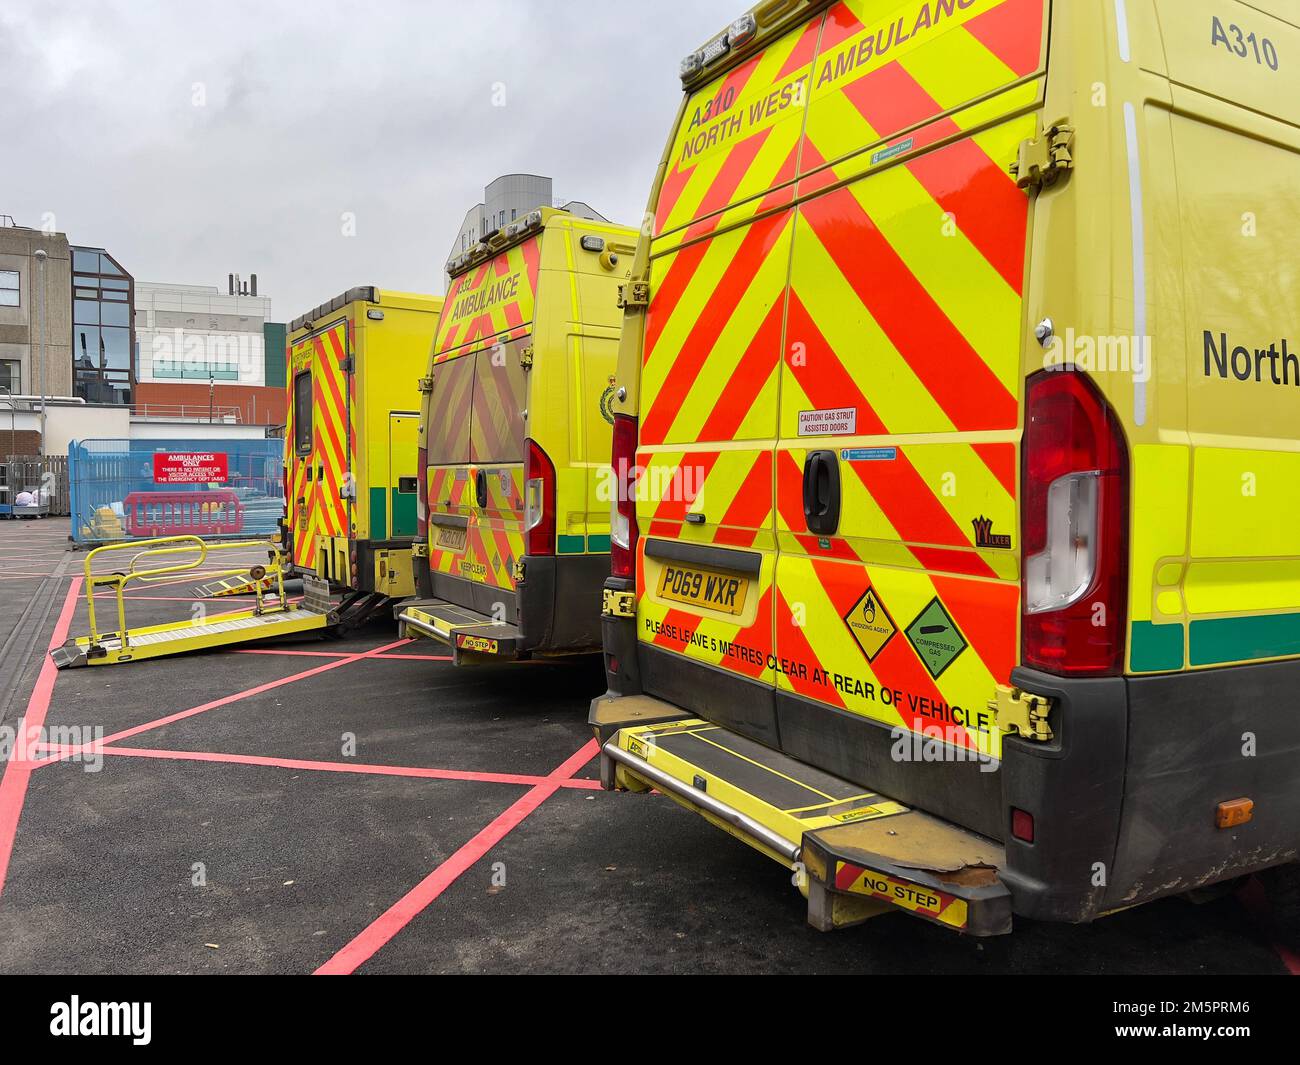 Rear of Ambulance Vehicles Stock Photo